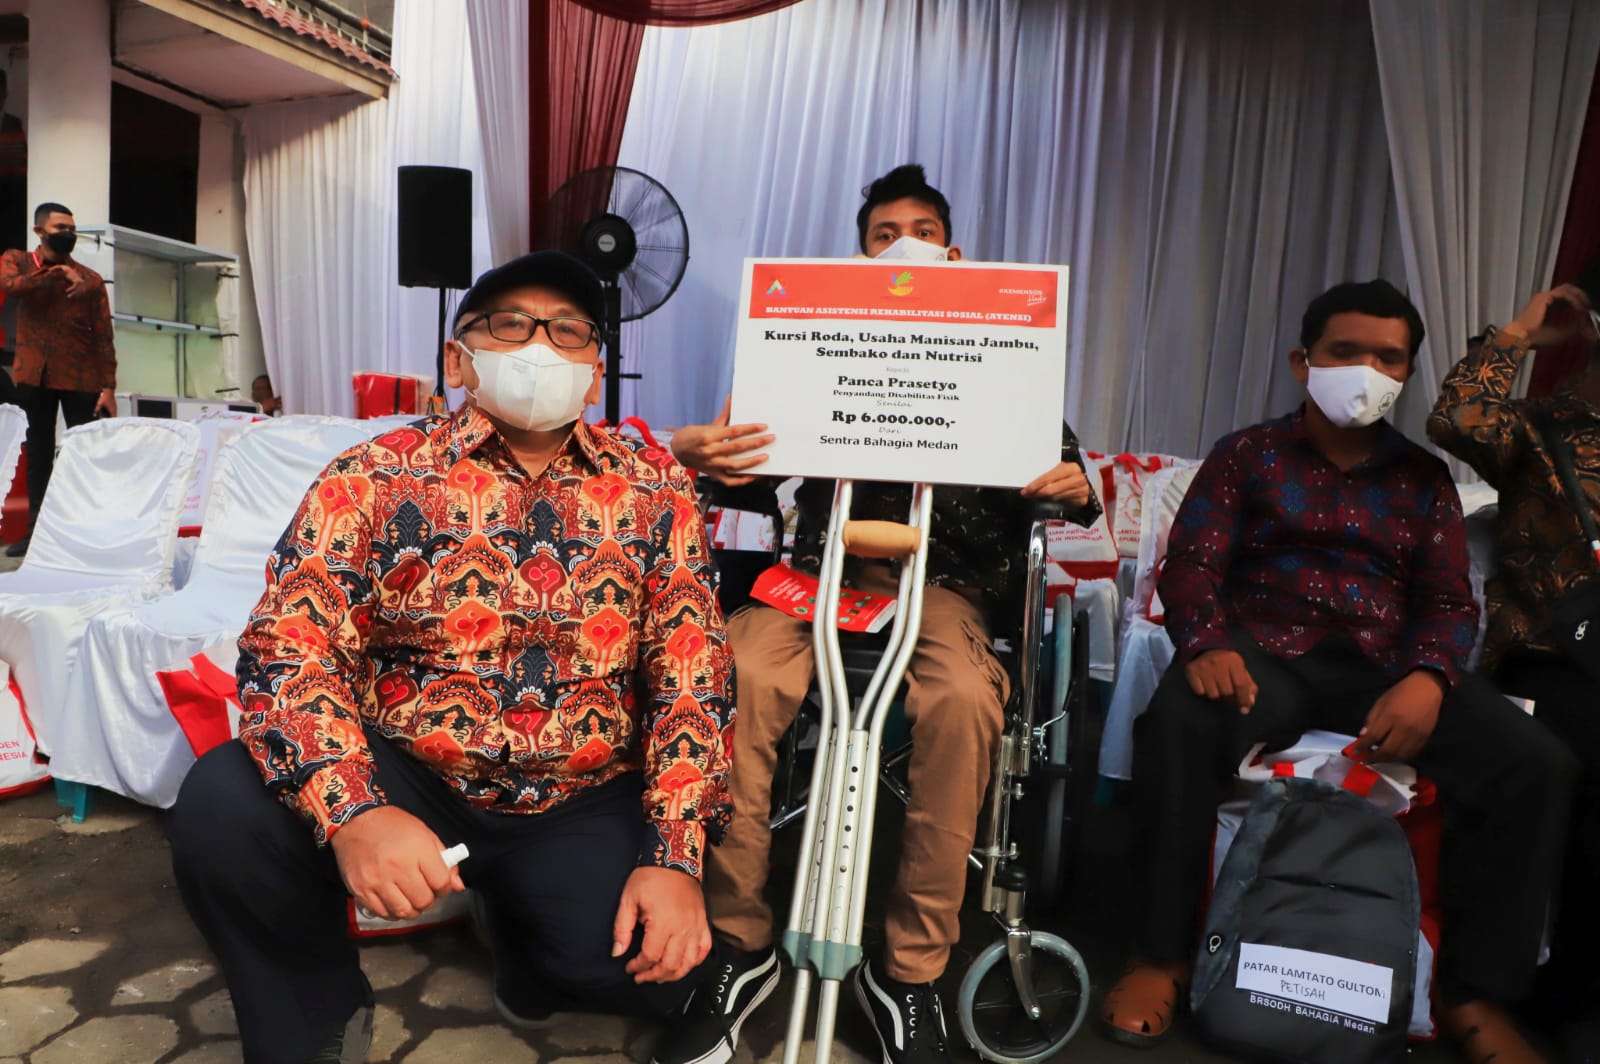 Presiden Joko Widodo Salurkan dan Cek langsung Bantuan Sosial di Pasar Petisah Medan